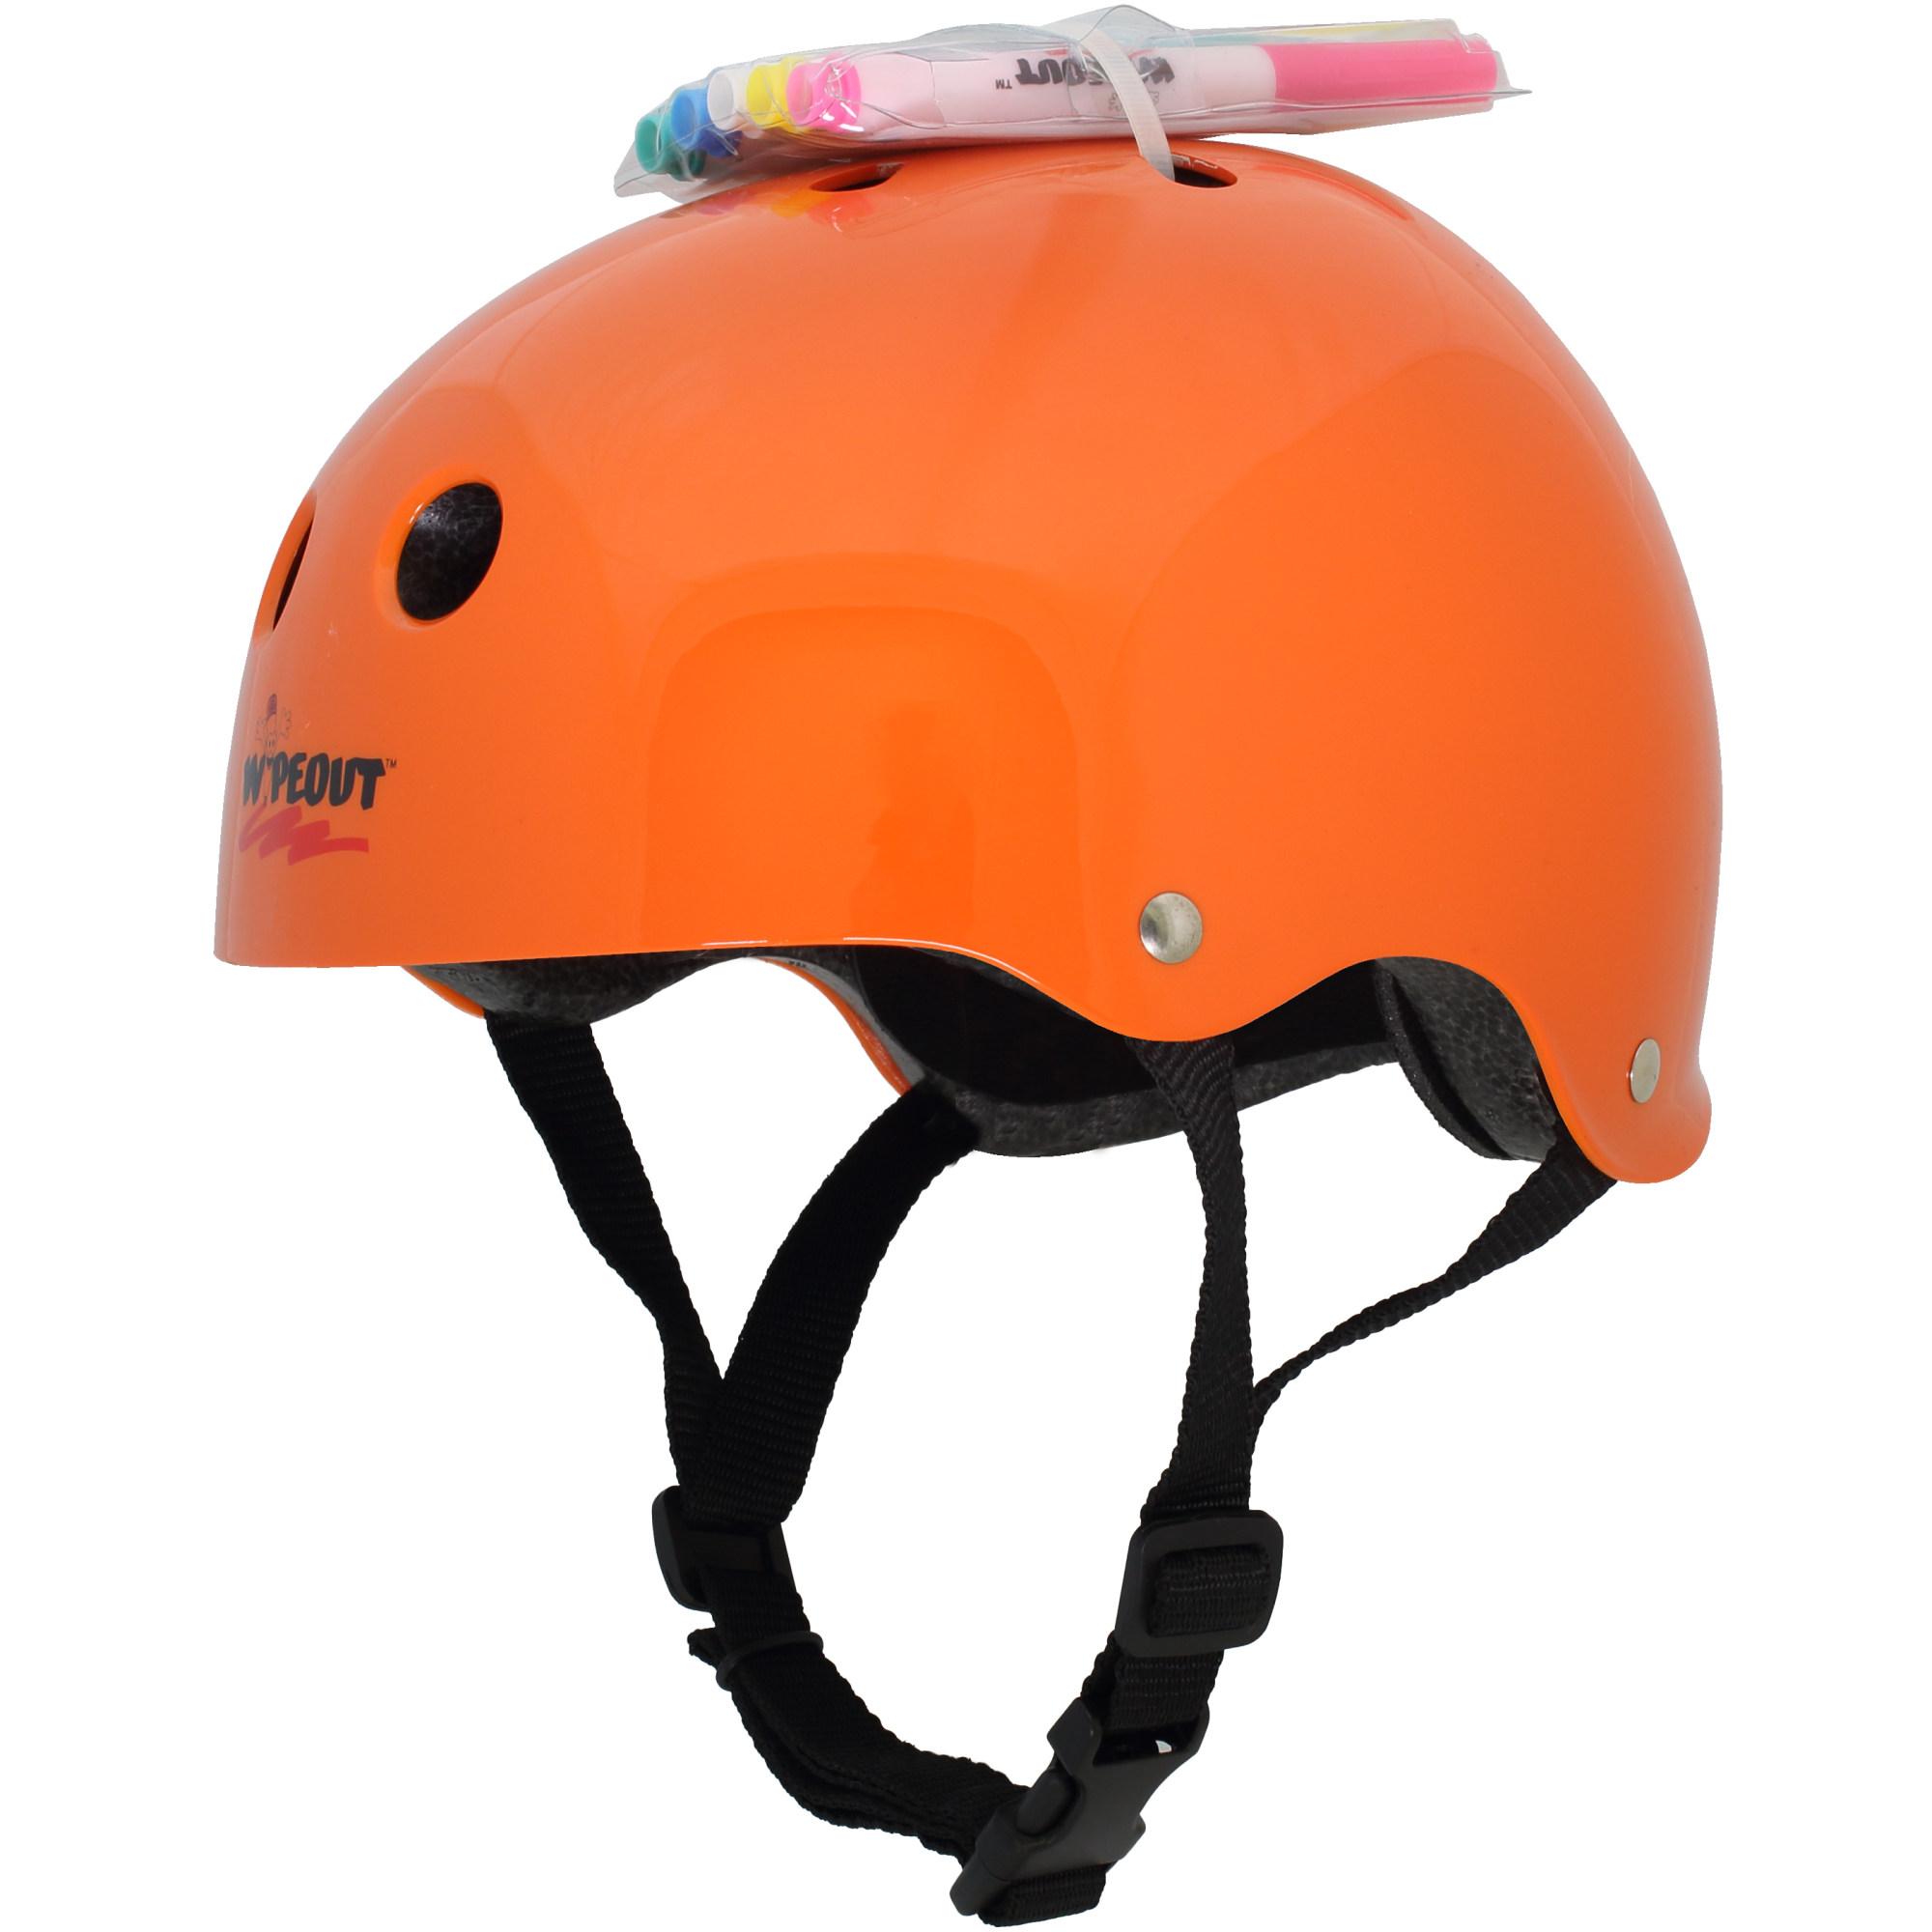 Шлем защитный спортивный WIPEOUT Neon Tangerine с фломастерами и трафаретами размер M 5+ обхват 49-52 см - фото 4